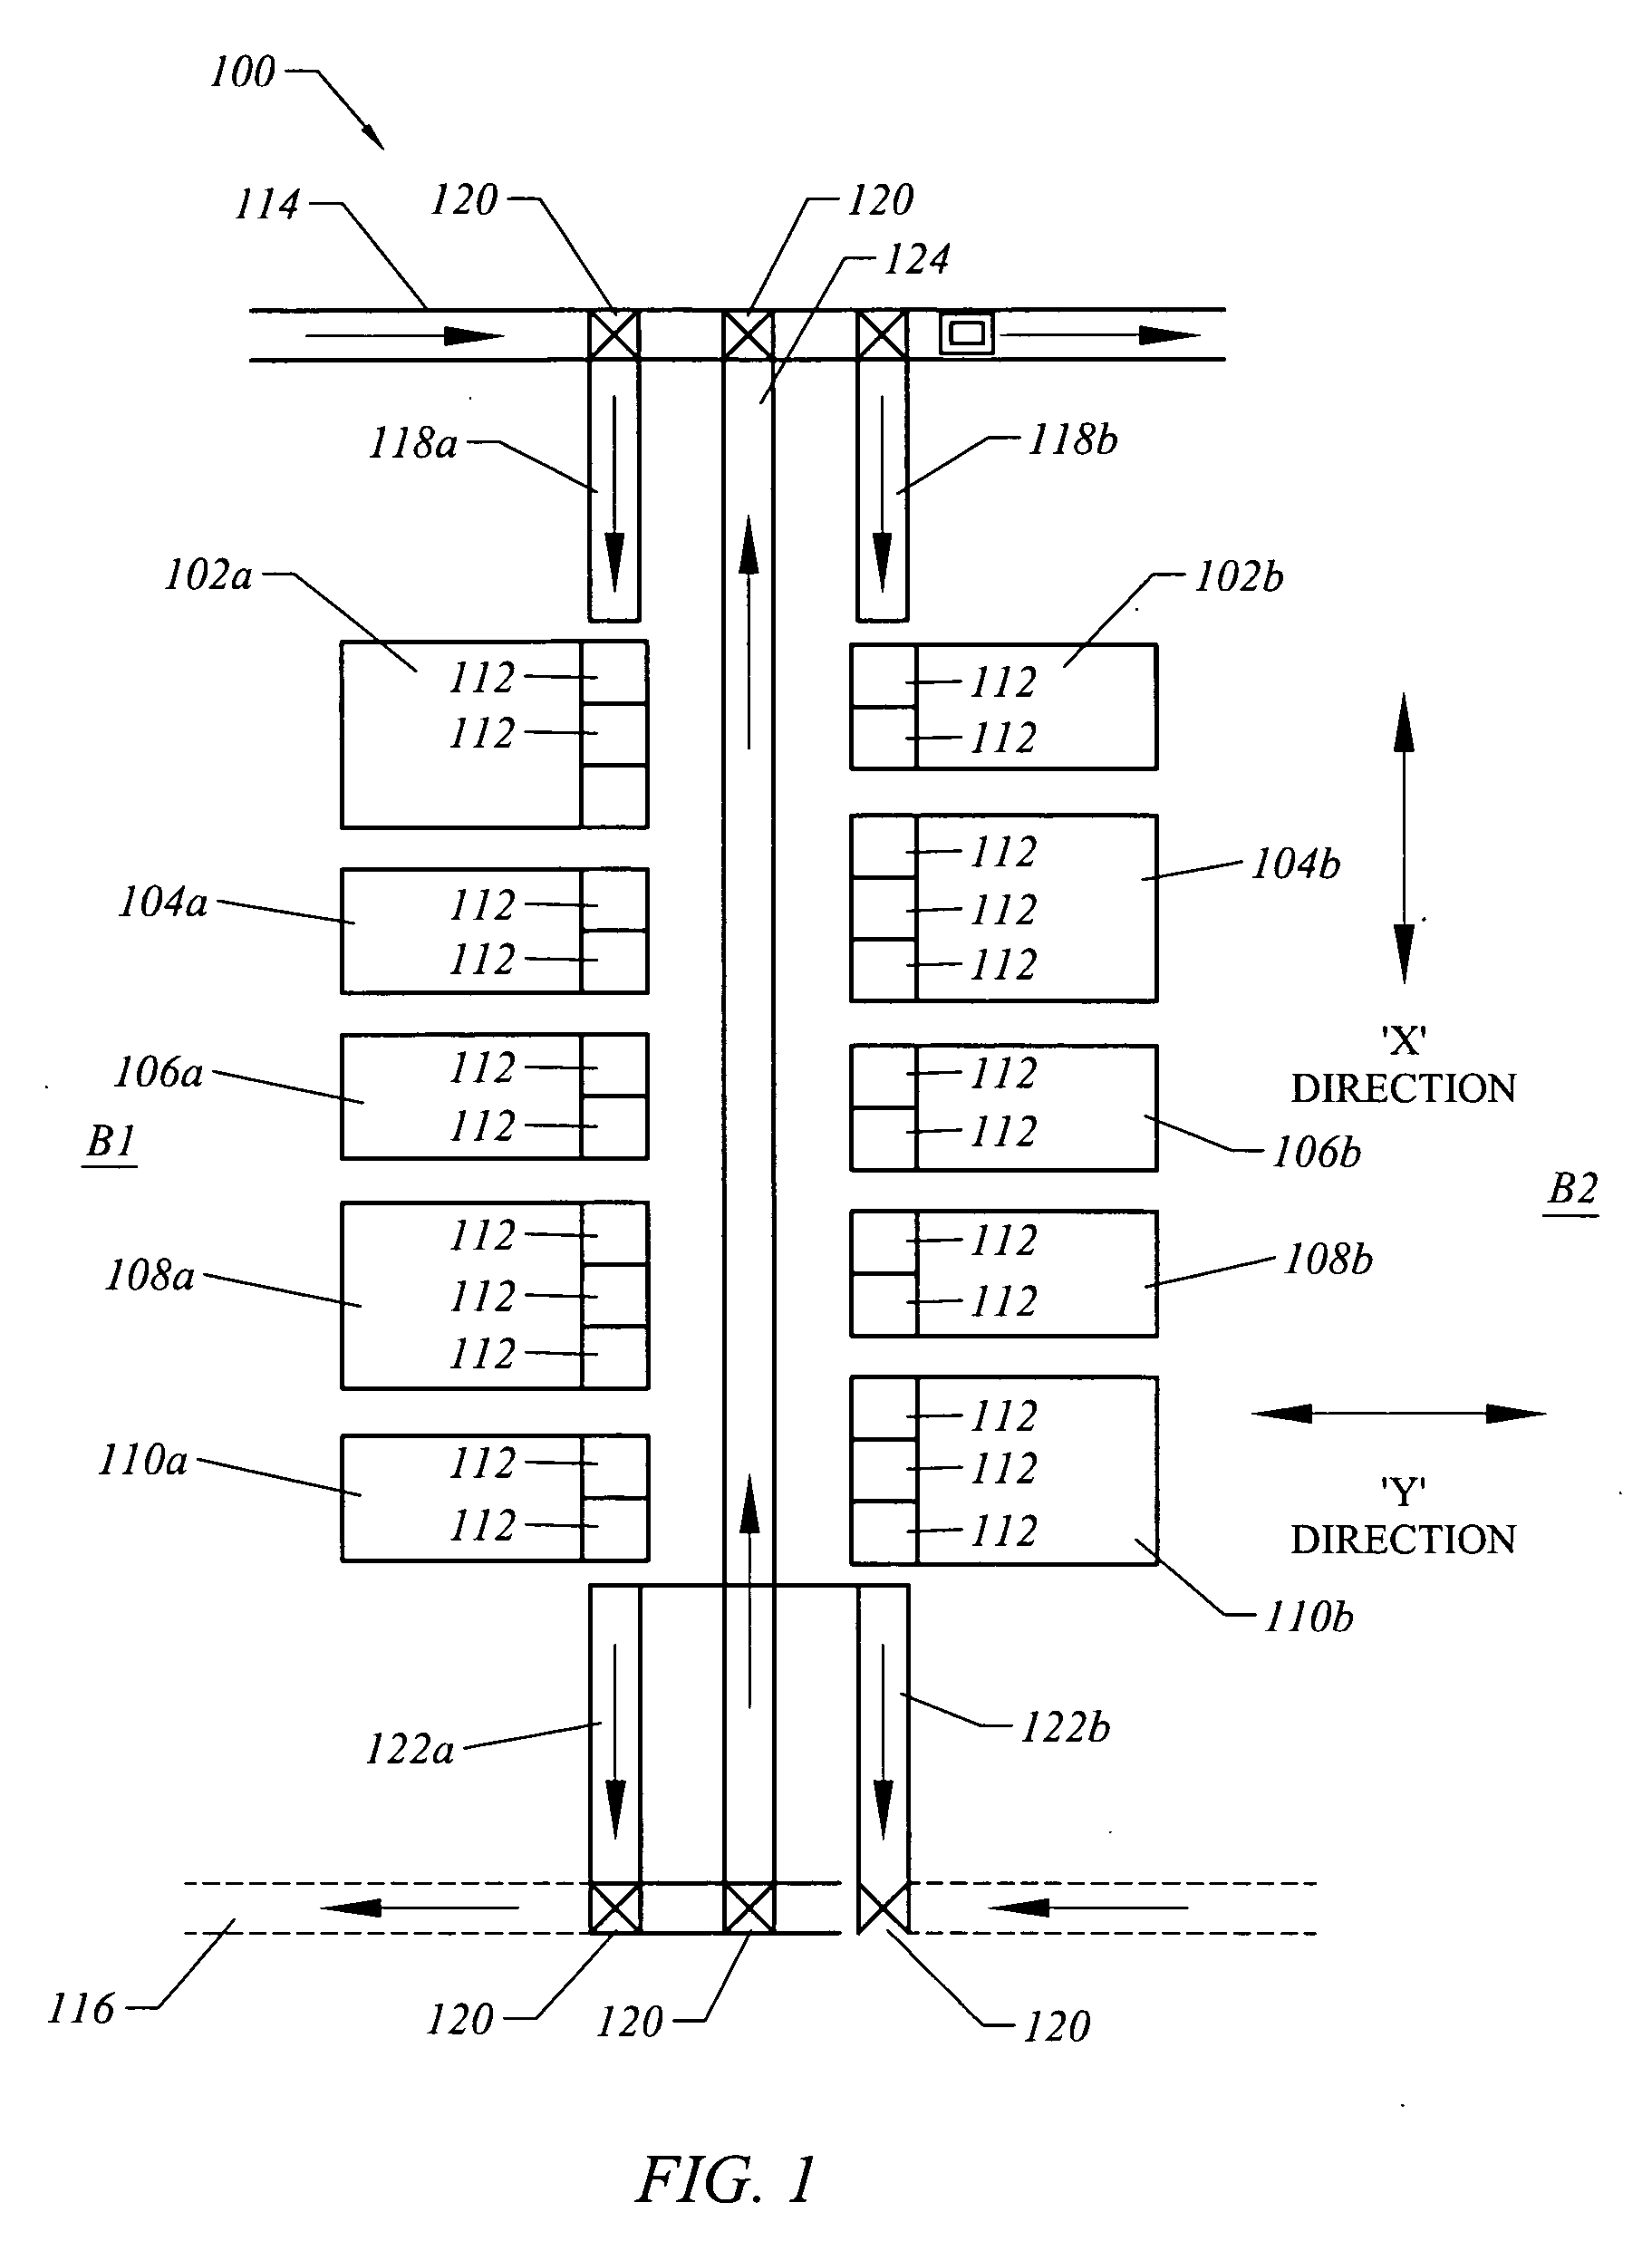 Discontinuous conveyor system